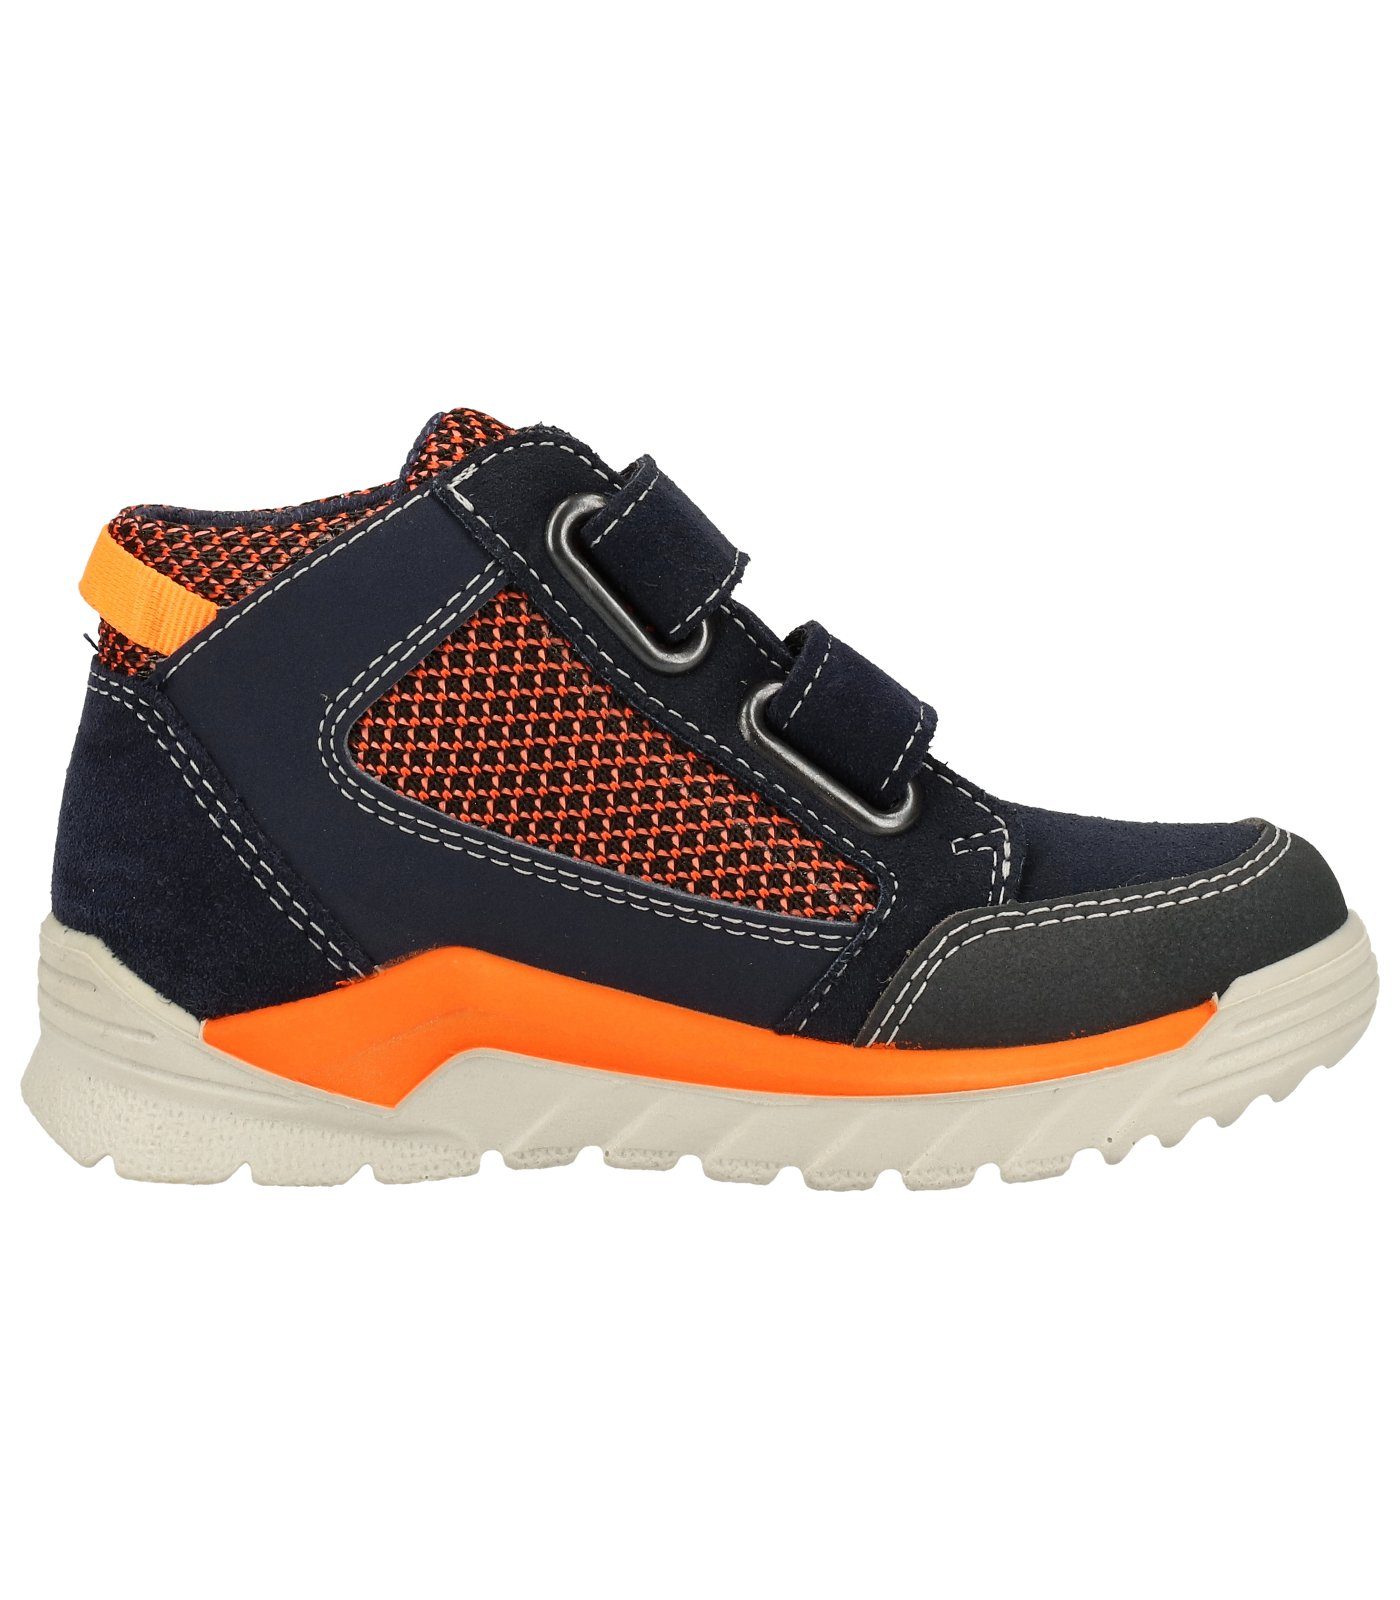 Ricosta Sneaker Leder/Textil Sneaker nautic/orange